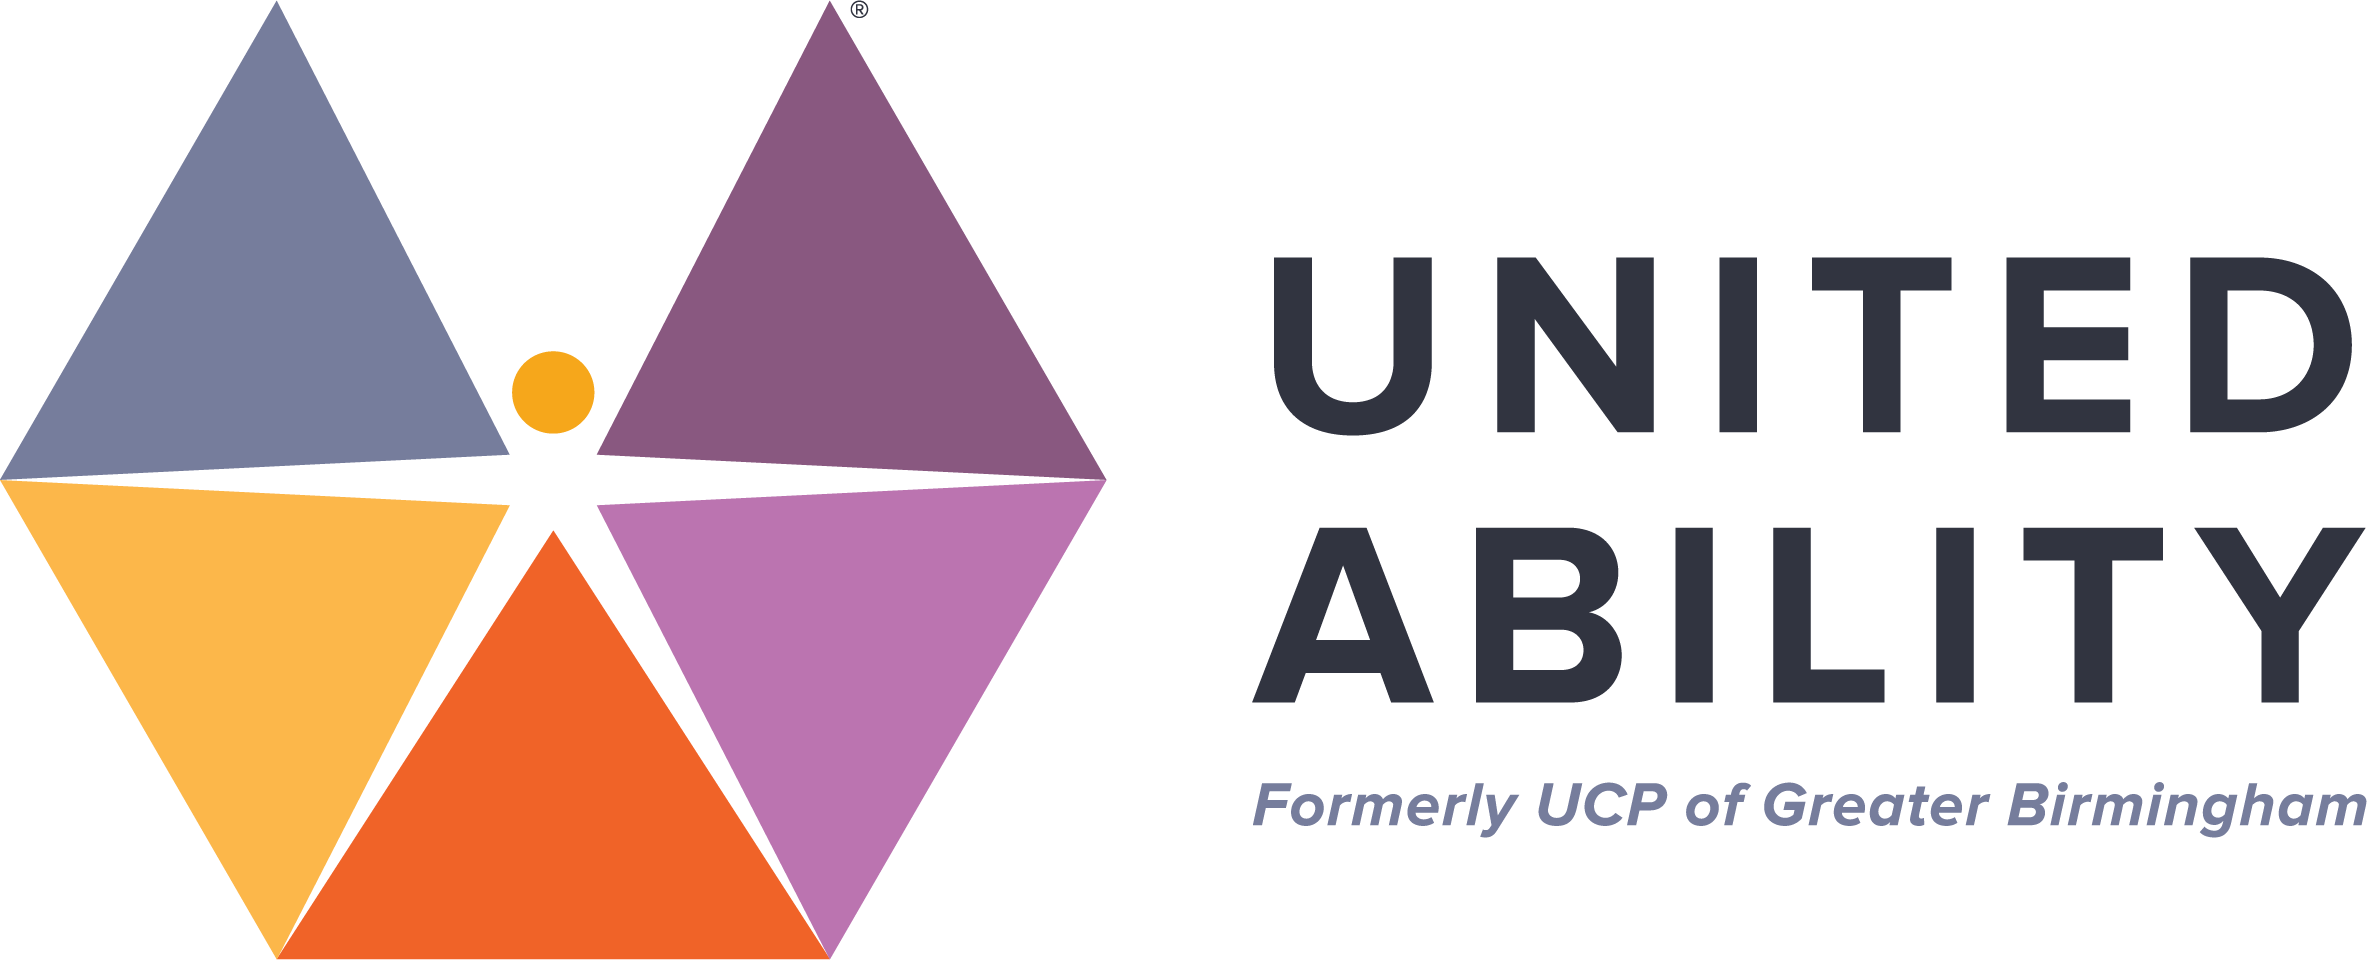 Birmingham Logo - United Ability | Nonprofit Disability Services | Birmingham, AL